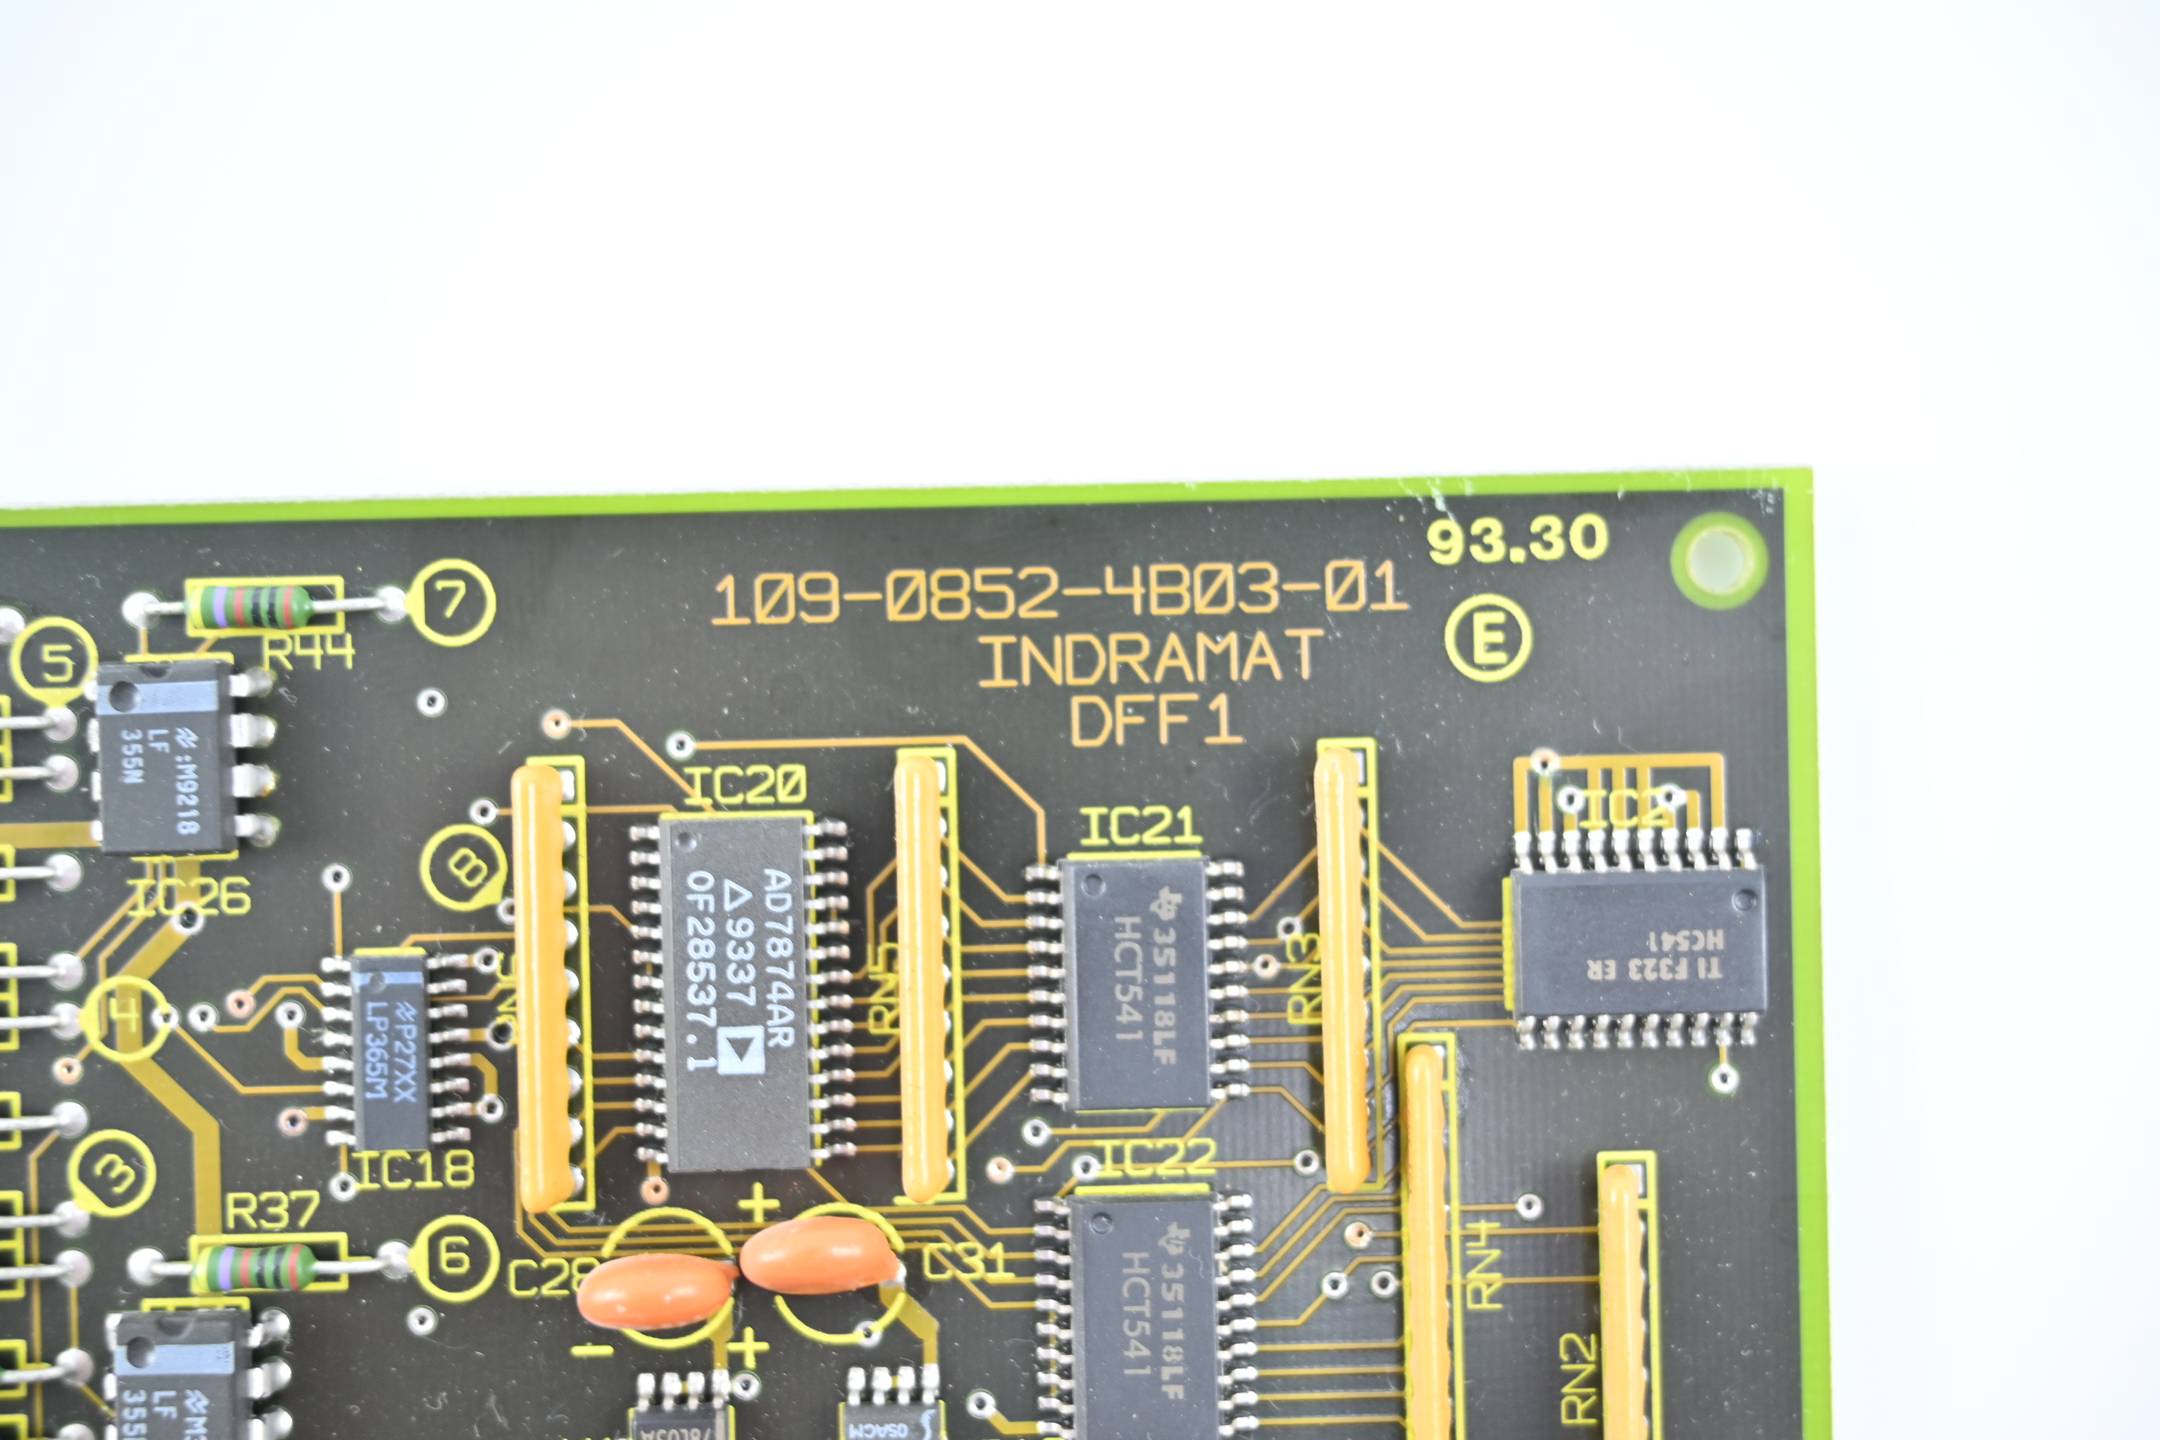 Indramat Interface Modul DFF1.1 ( 109.0852-4B03-01 ) ( DFF 1.1 )